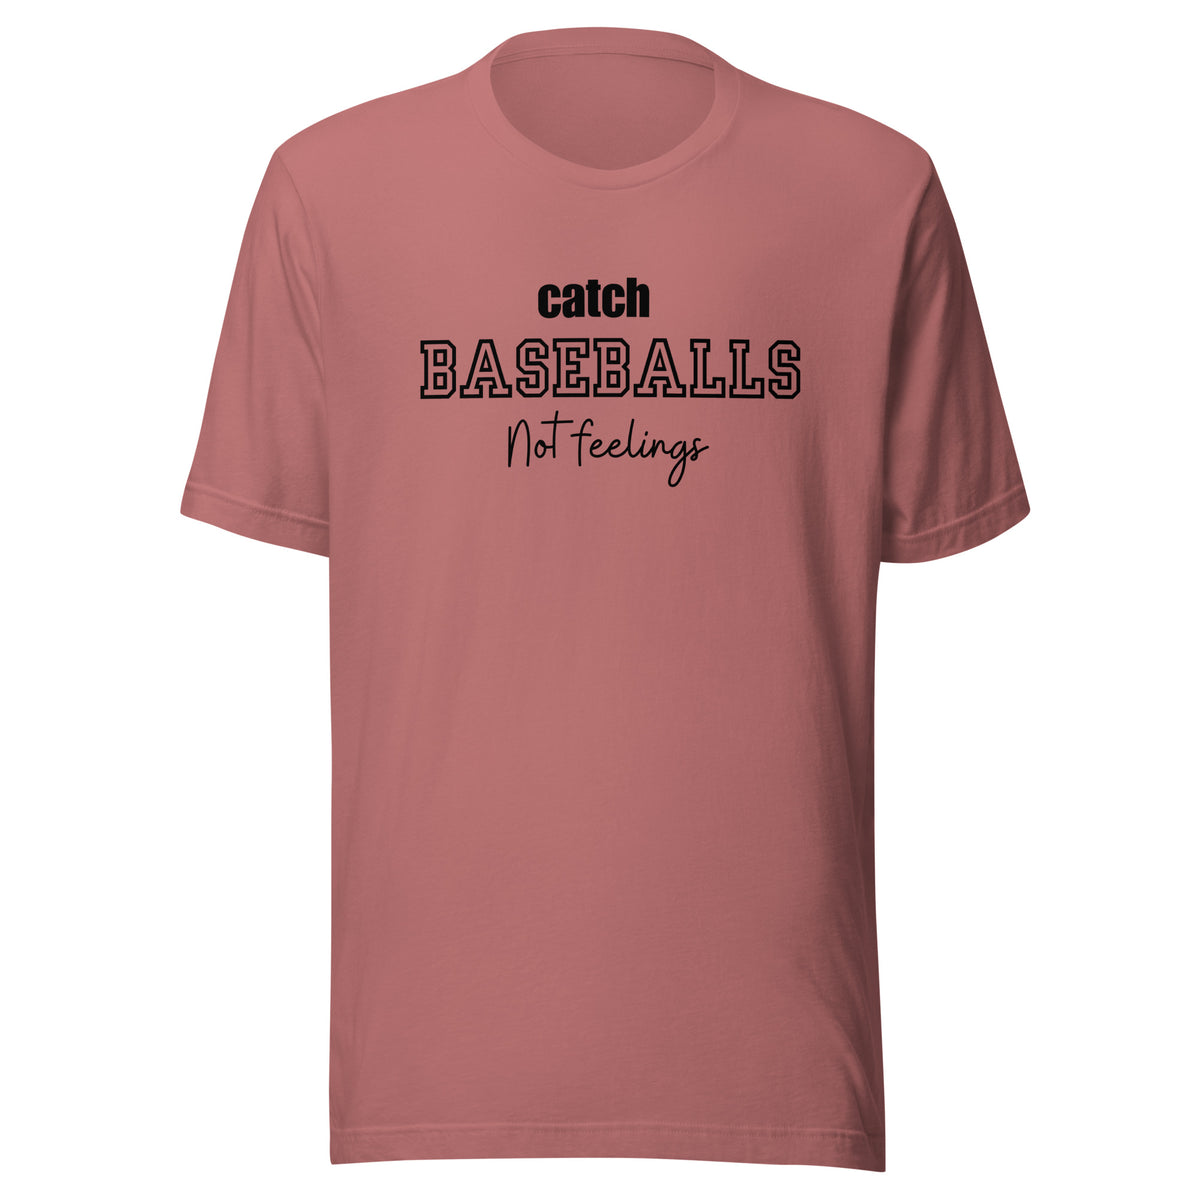 Catch Baseballs Not Feelings t-shirt